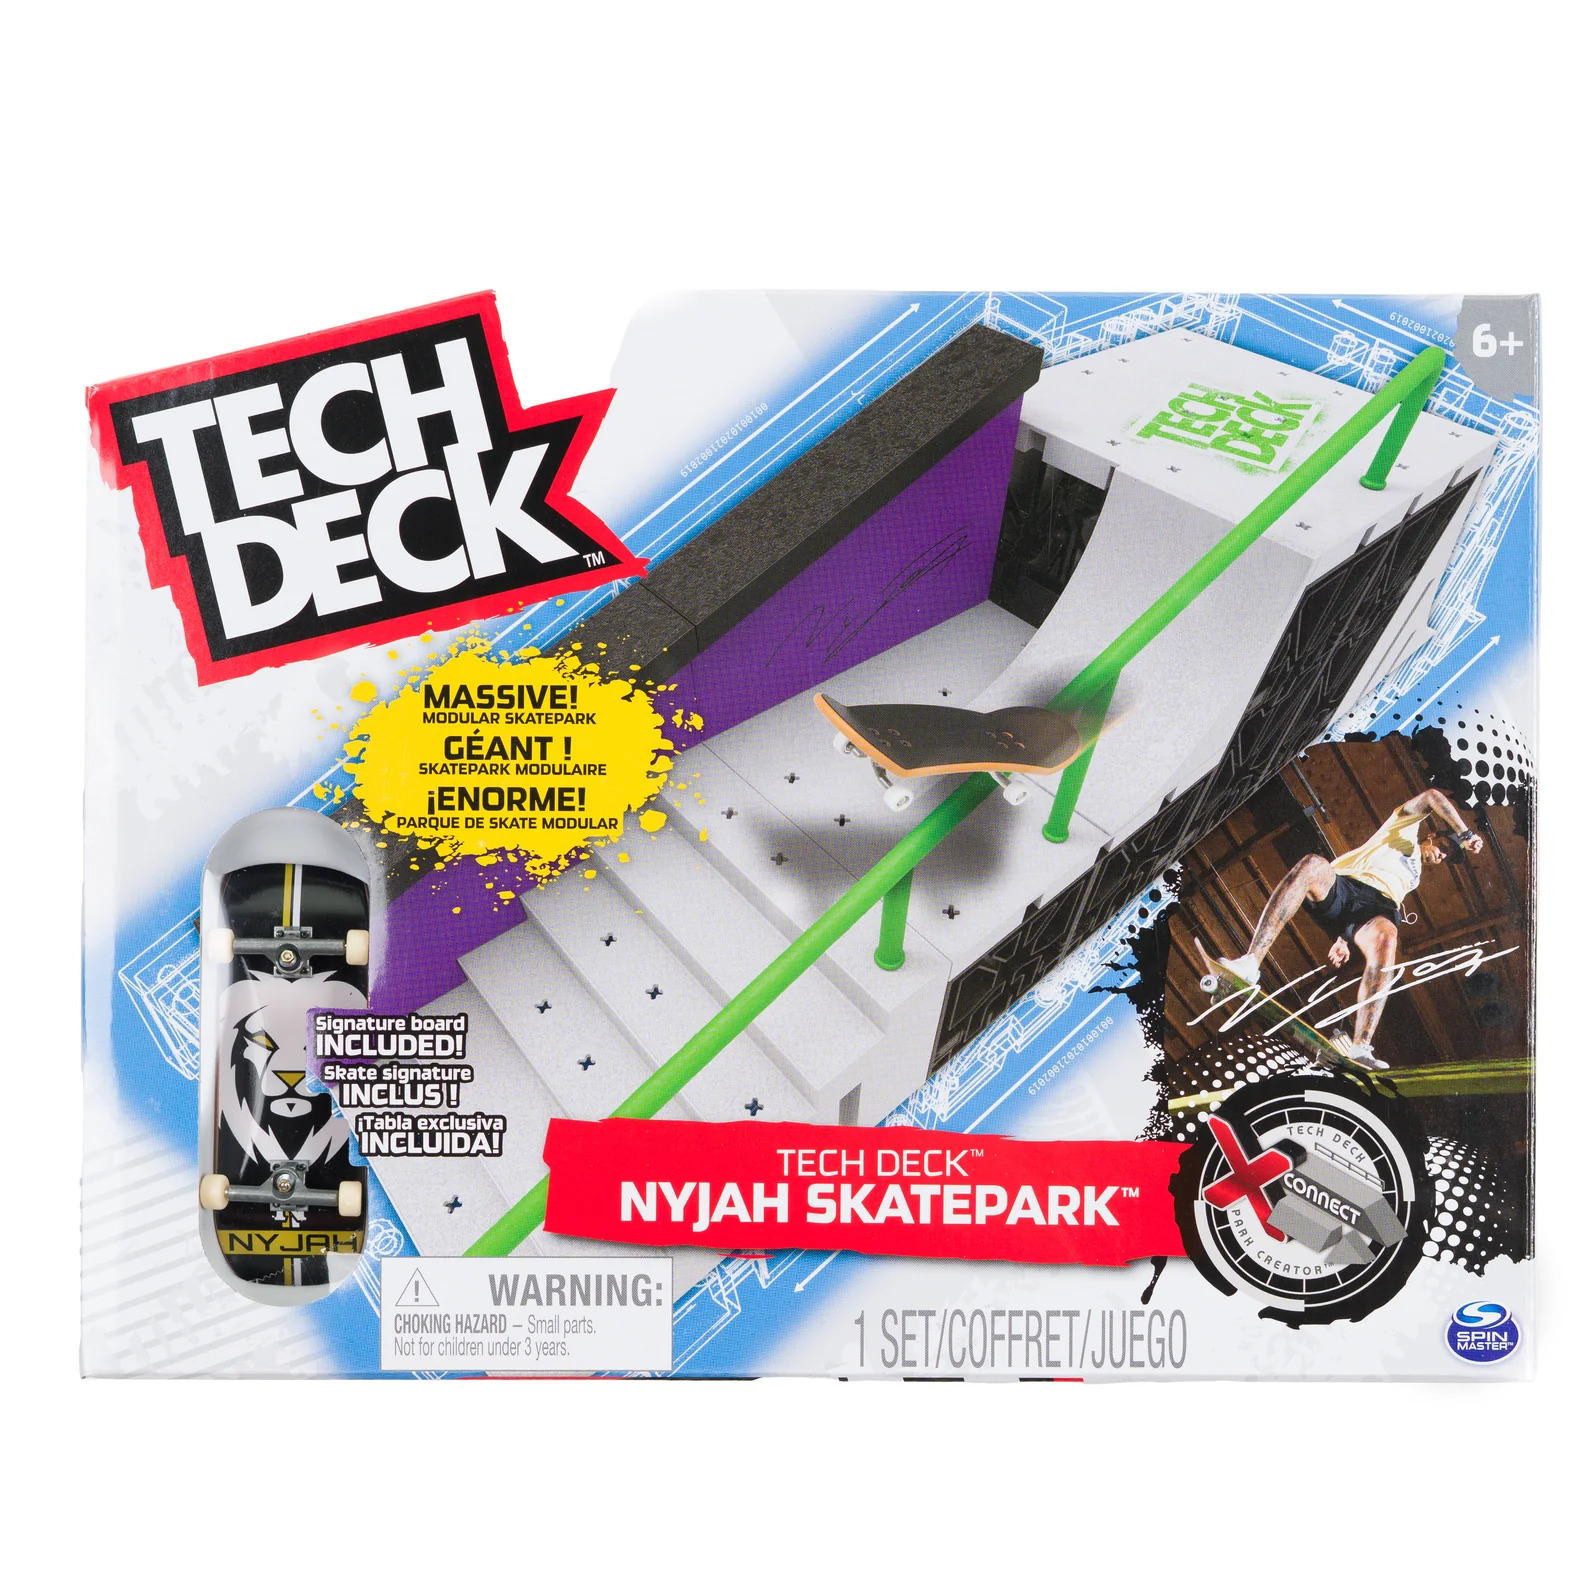 TECH DECK, Nyjah Skatepark X-Connect Park Creator, Massive Customizable Ramp Set